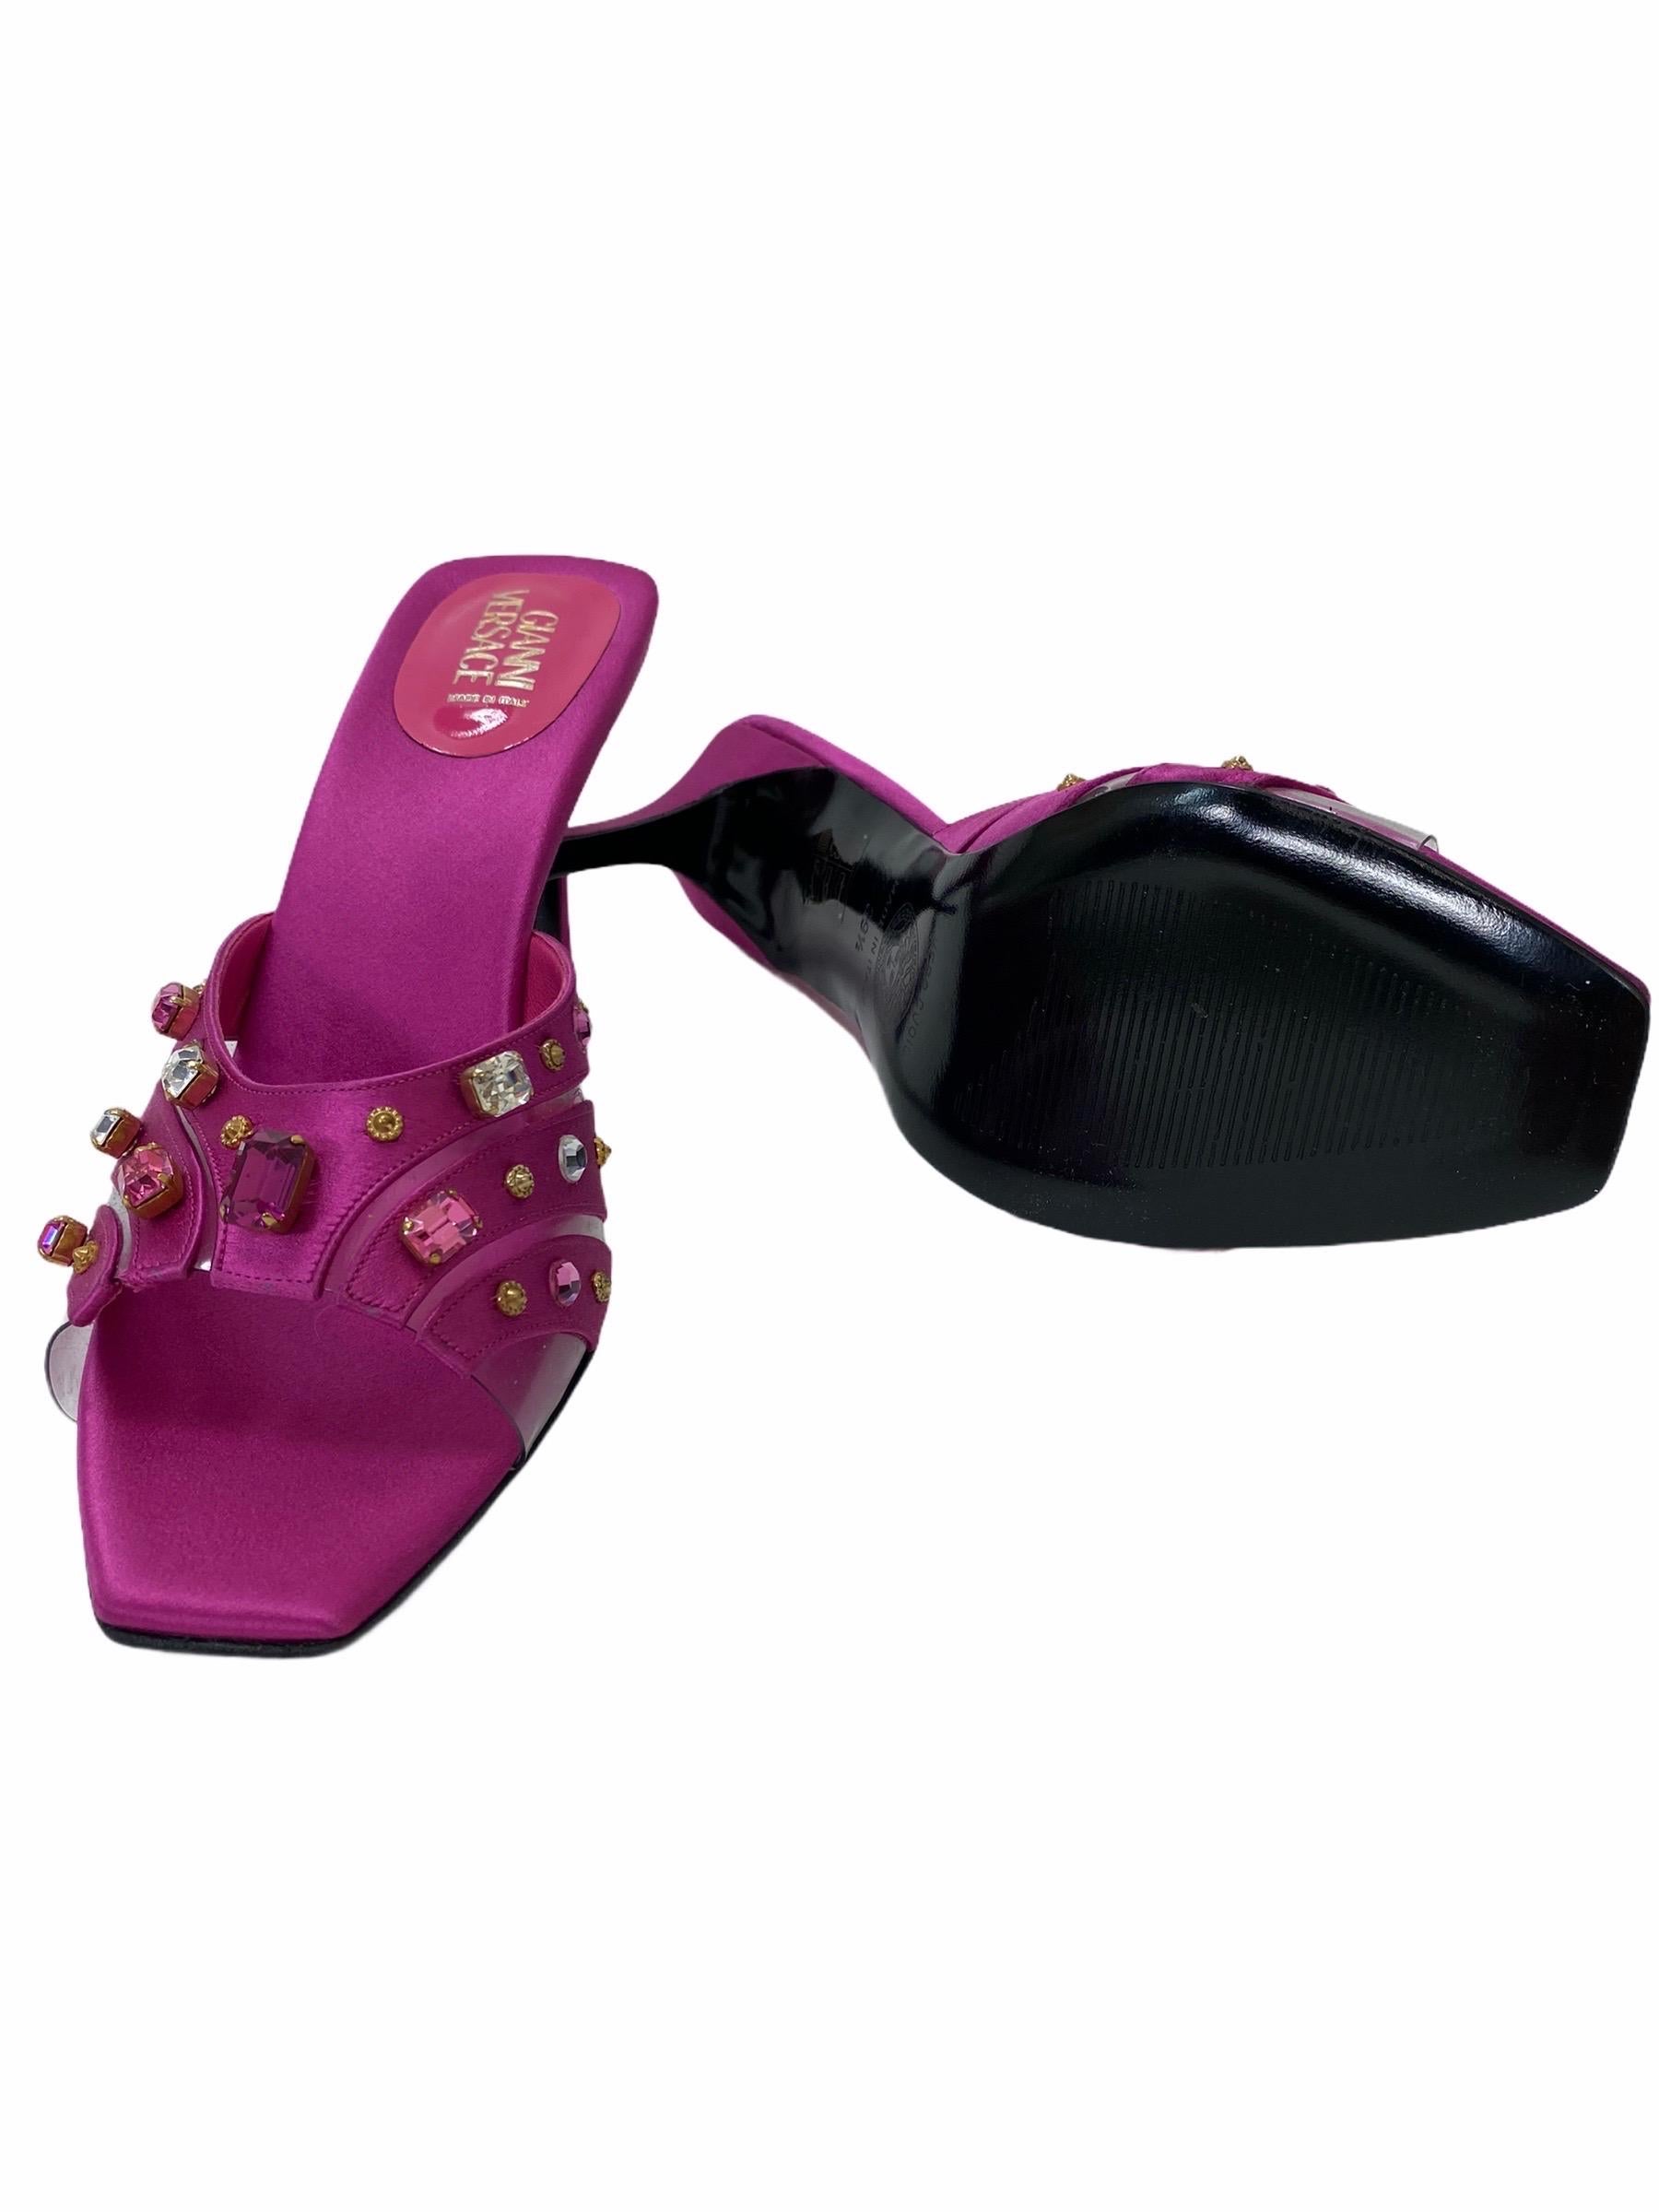 S/S 2000 Vintage Gianni Versace Crystal Embellished Pink Sandals 39.5 – 9.5 NWT For Sale 1